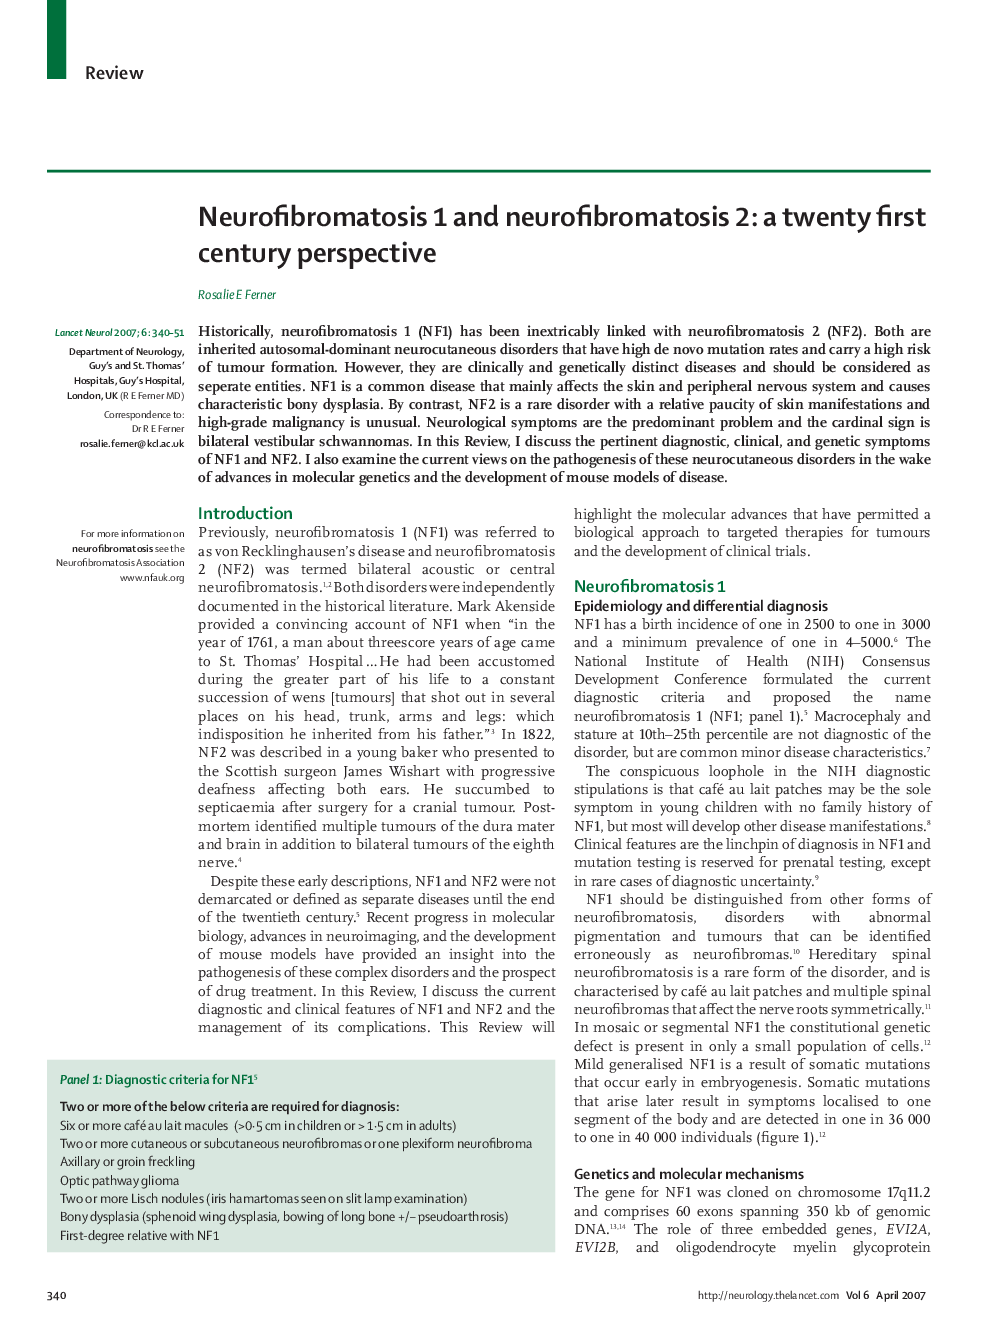 Neurofibromatosis 1 and neurofibromatosis 2: a twenty first century perspective